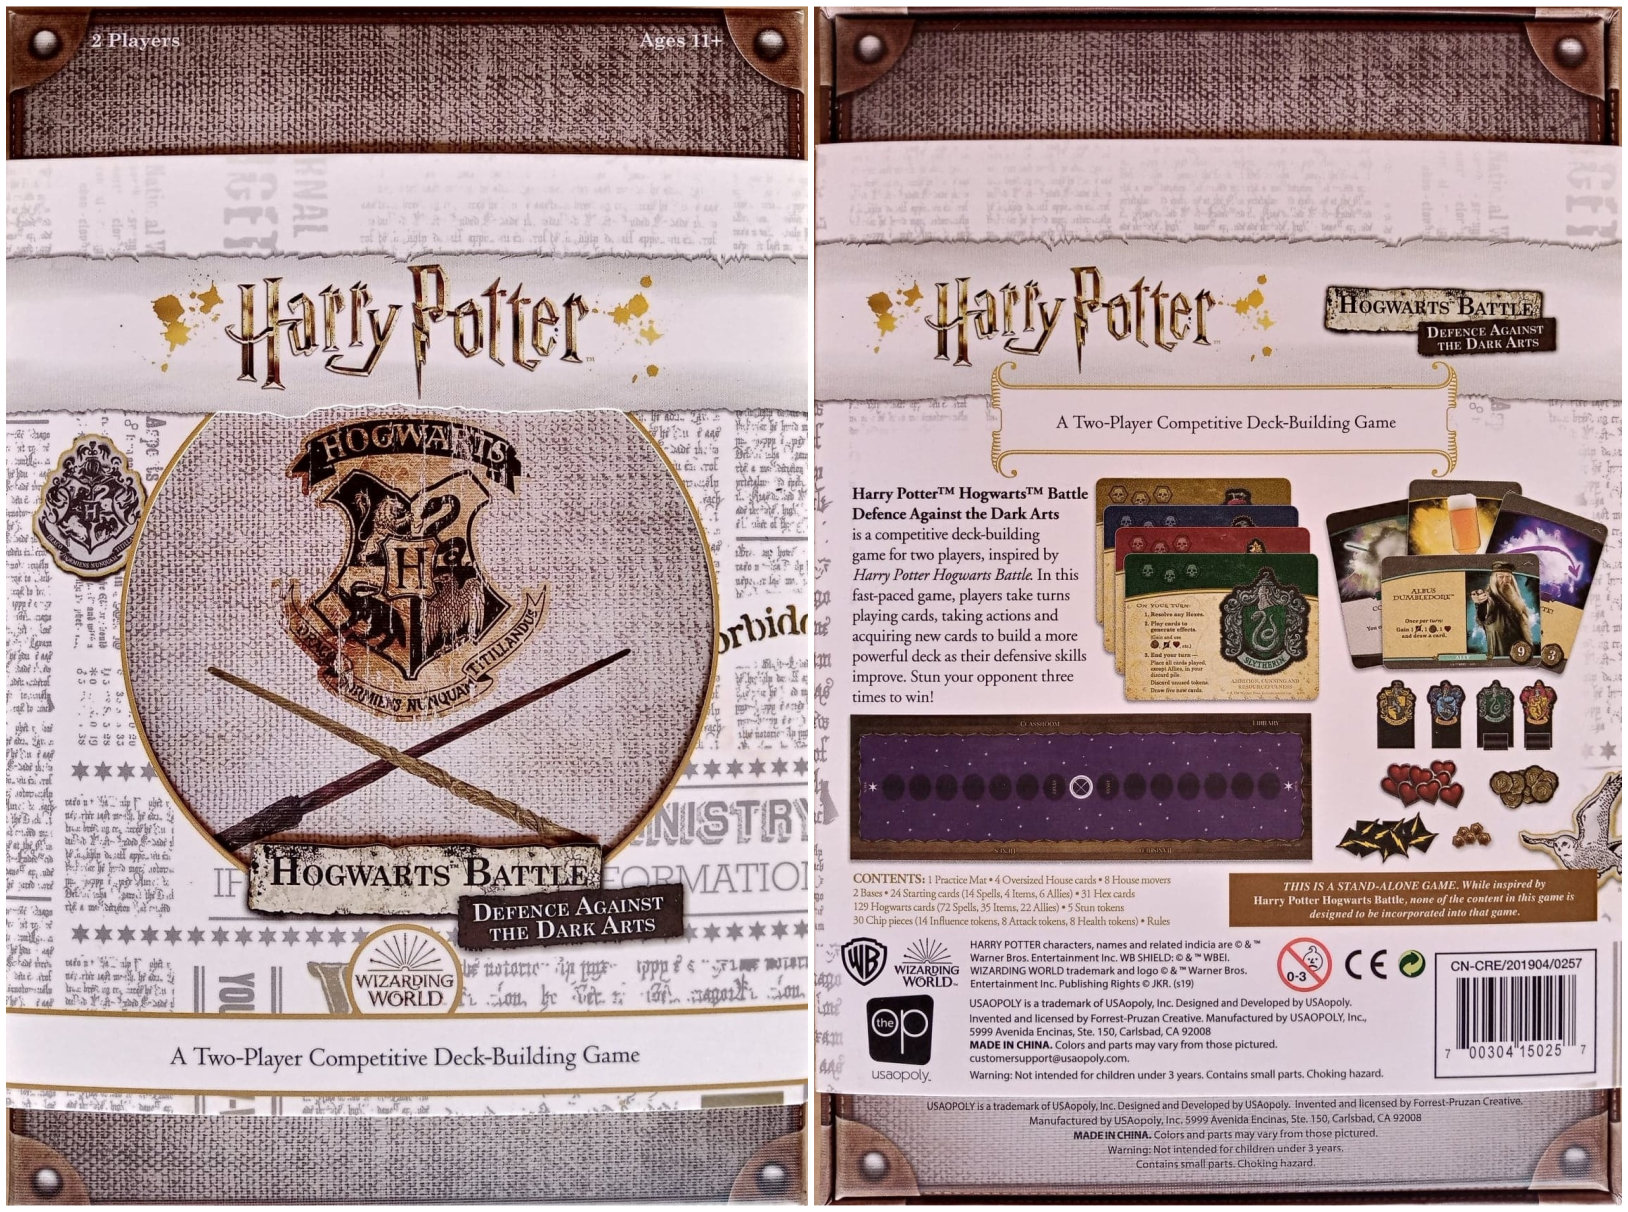 Harry Potter: Hogwarts Battle – Defense Against The Dark Arts